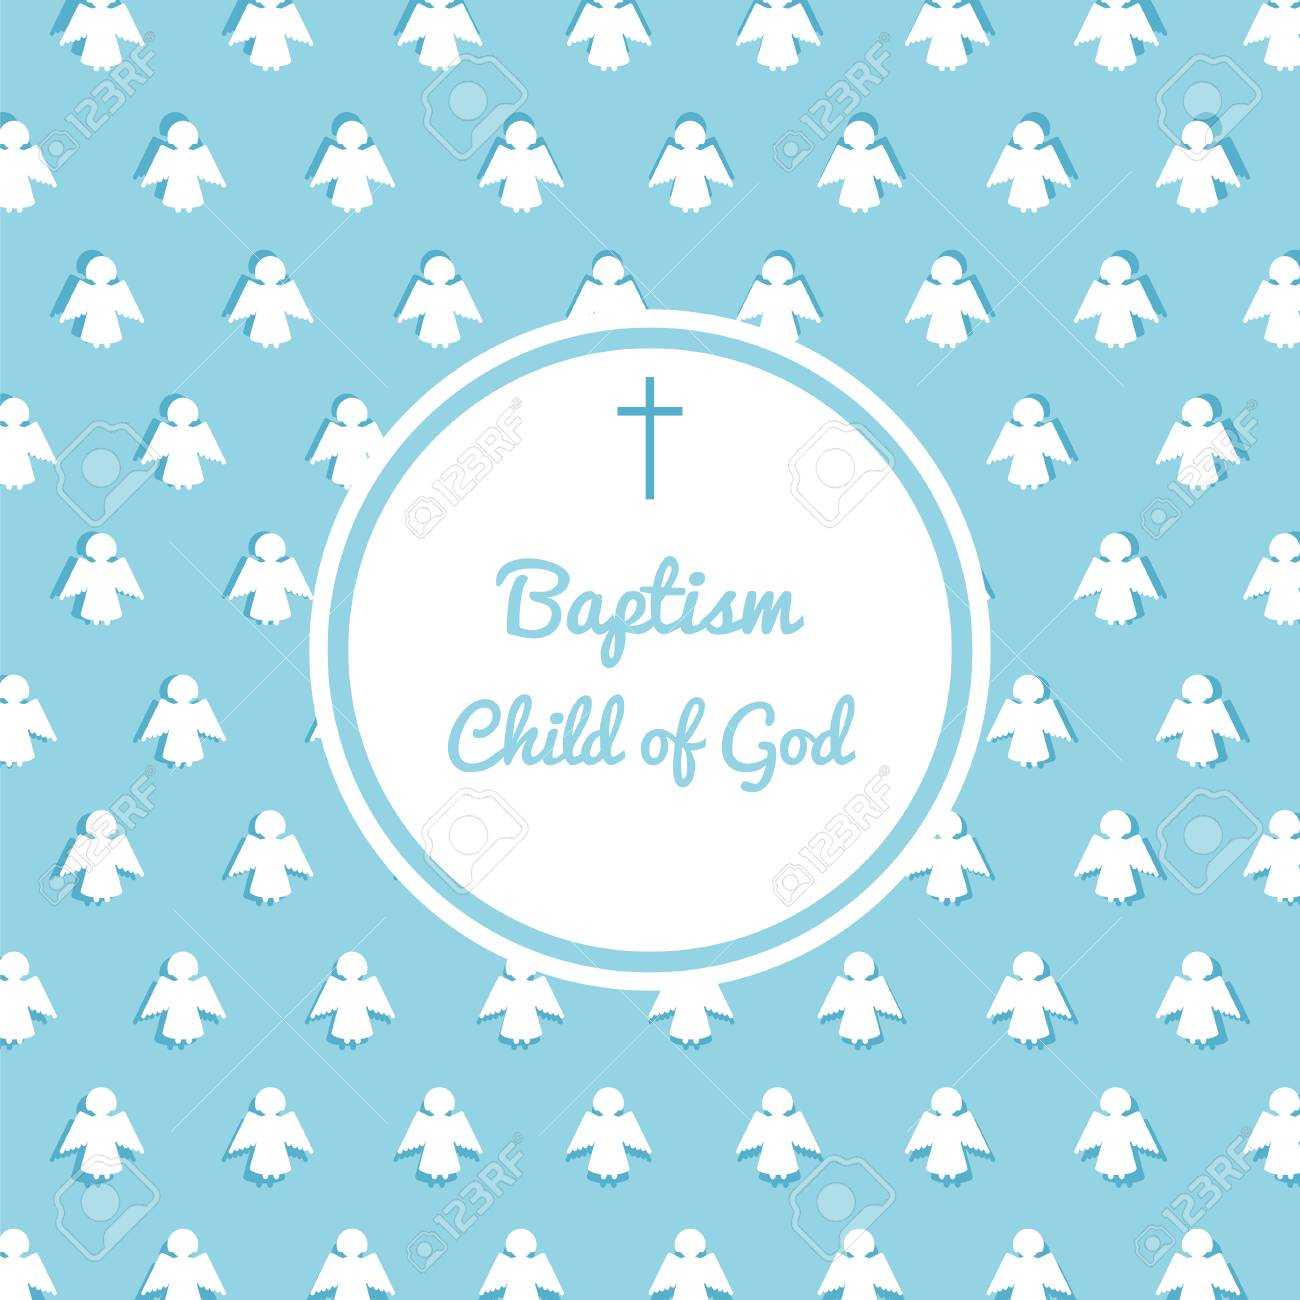 Baptism Invitation Card Template. Stock Vector Illustration For.. With Regard To Baptism Invitation Card Template